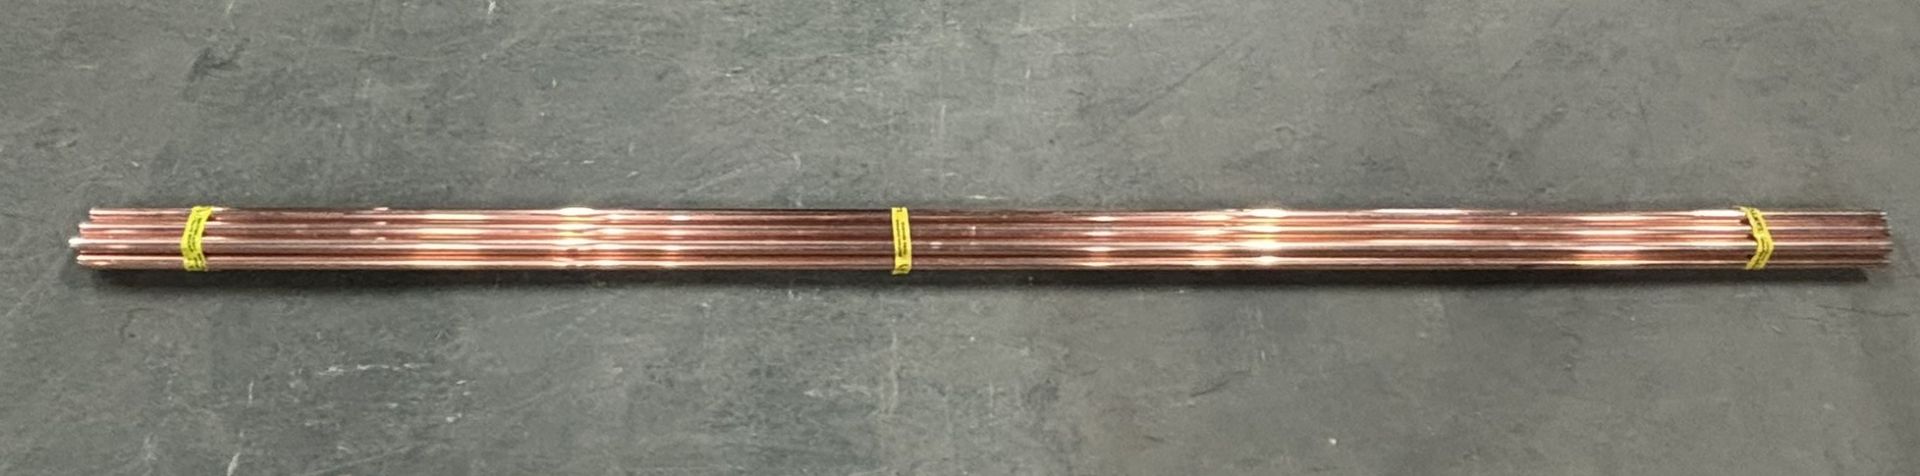 10 x 3Mtr x 27mm Copper Pipes